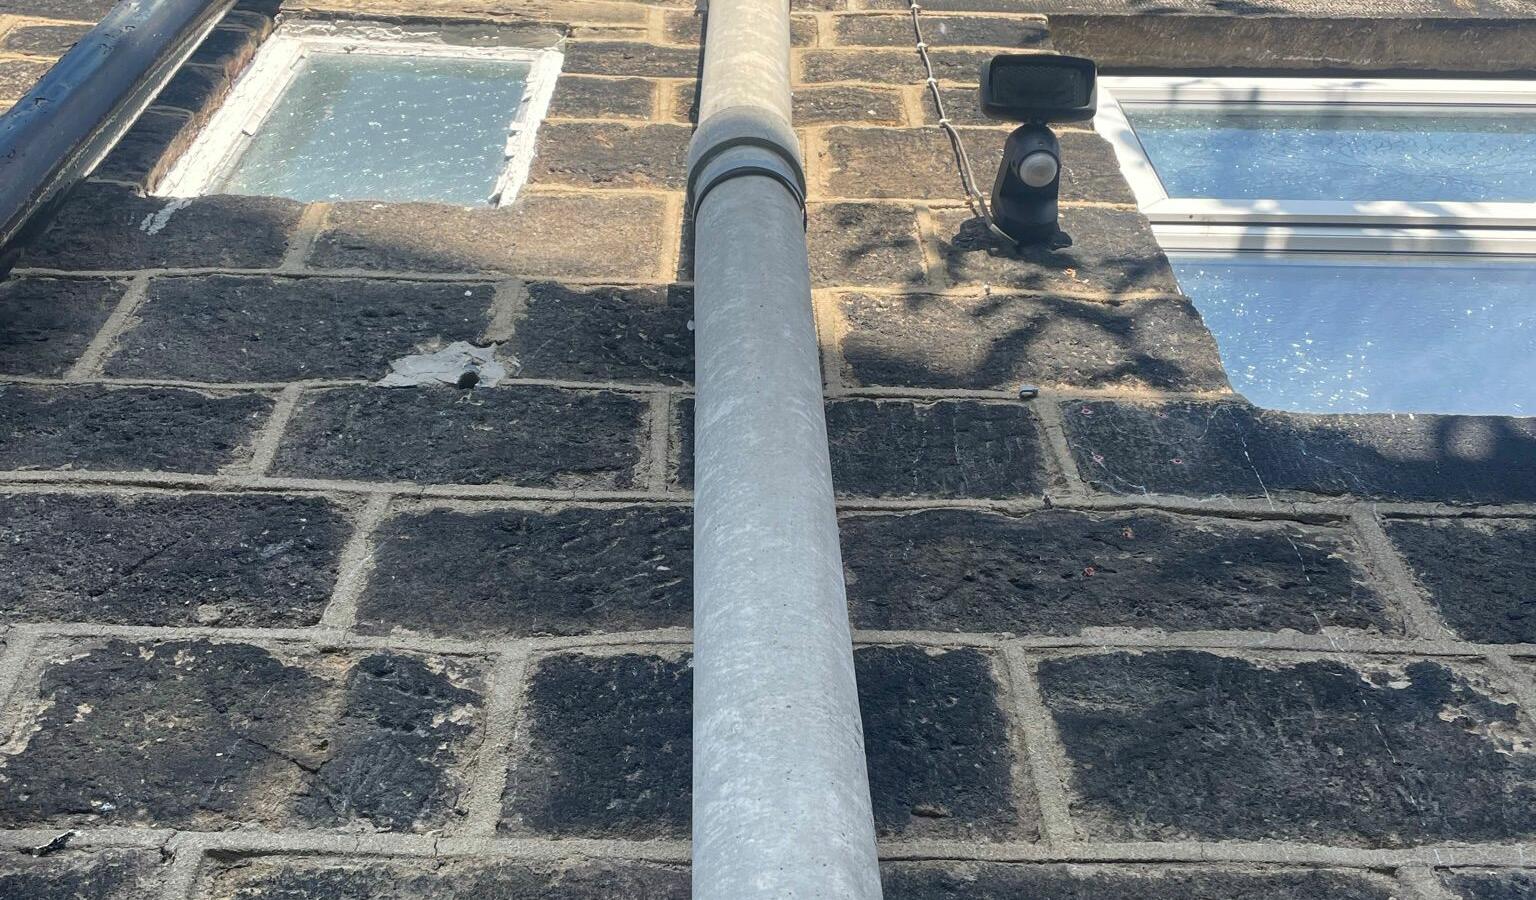 Full length asbestos cement flue pipe